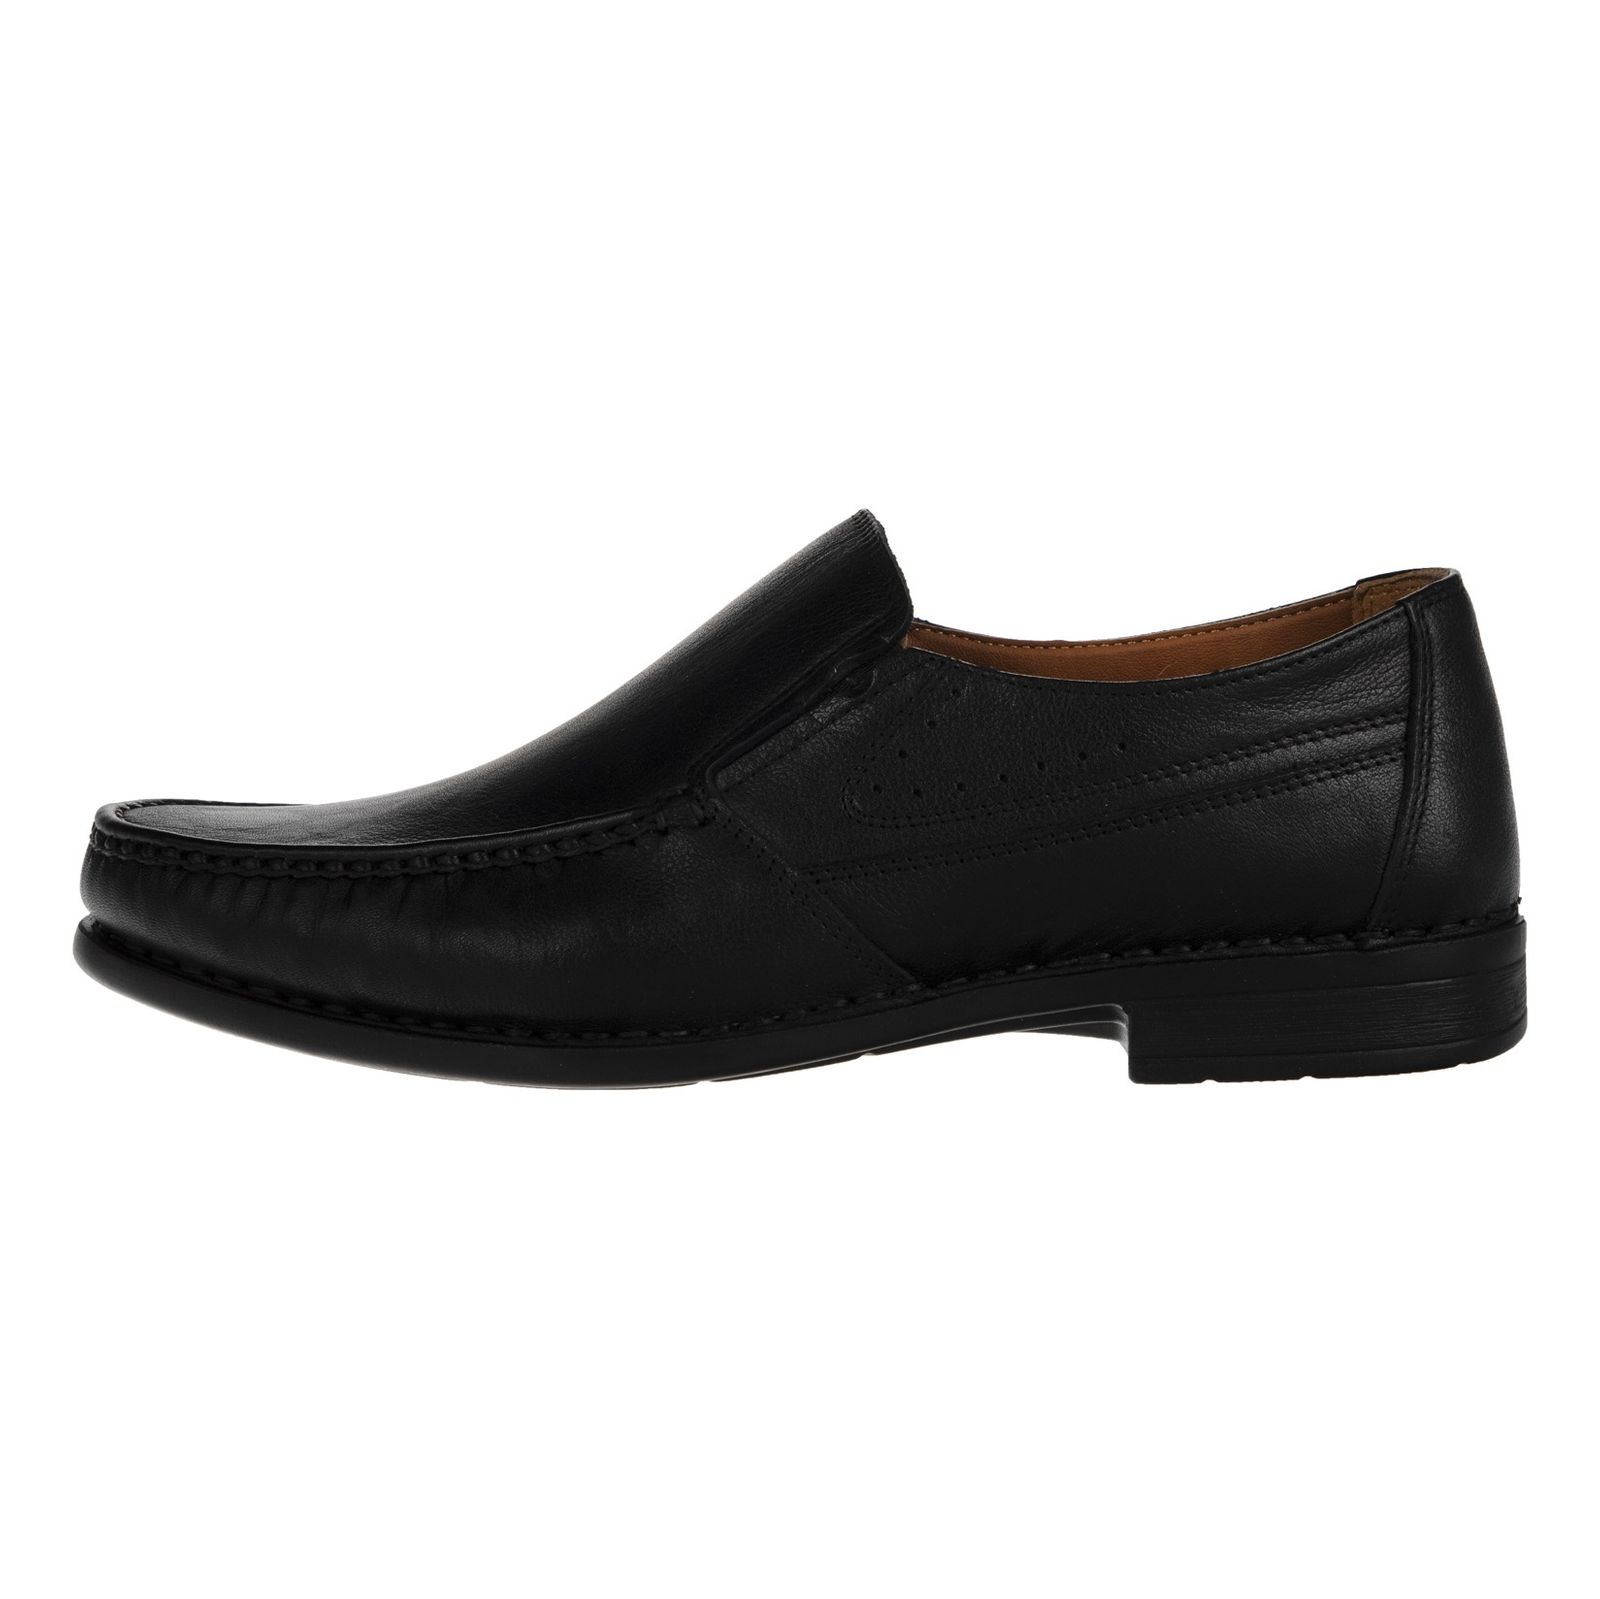 کفش روزمره مردانه پولاریس مدل 100294636-101 - مشکی - 2